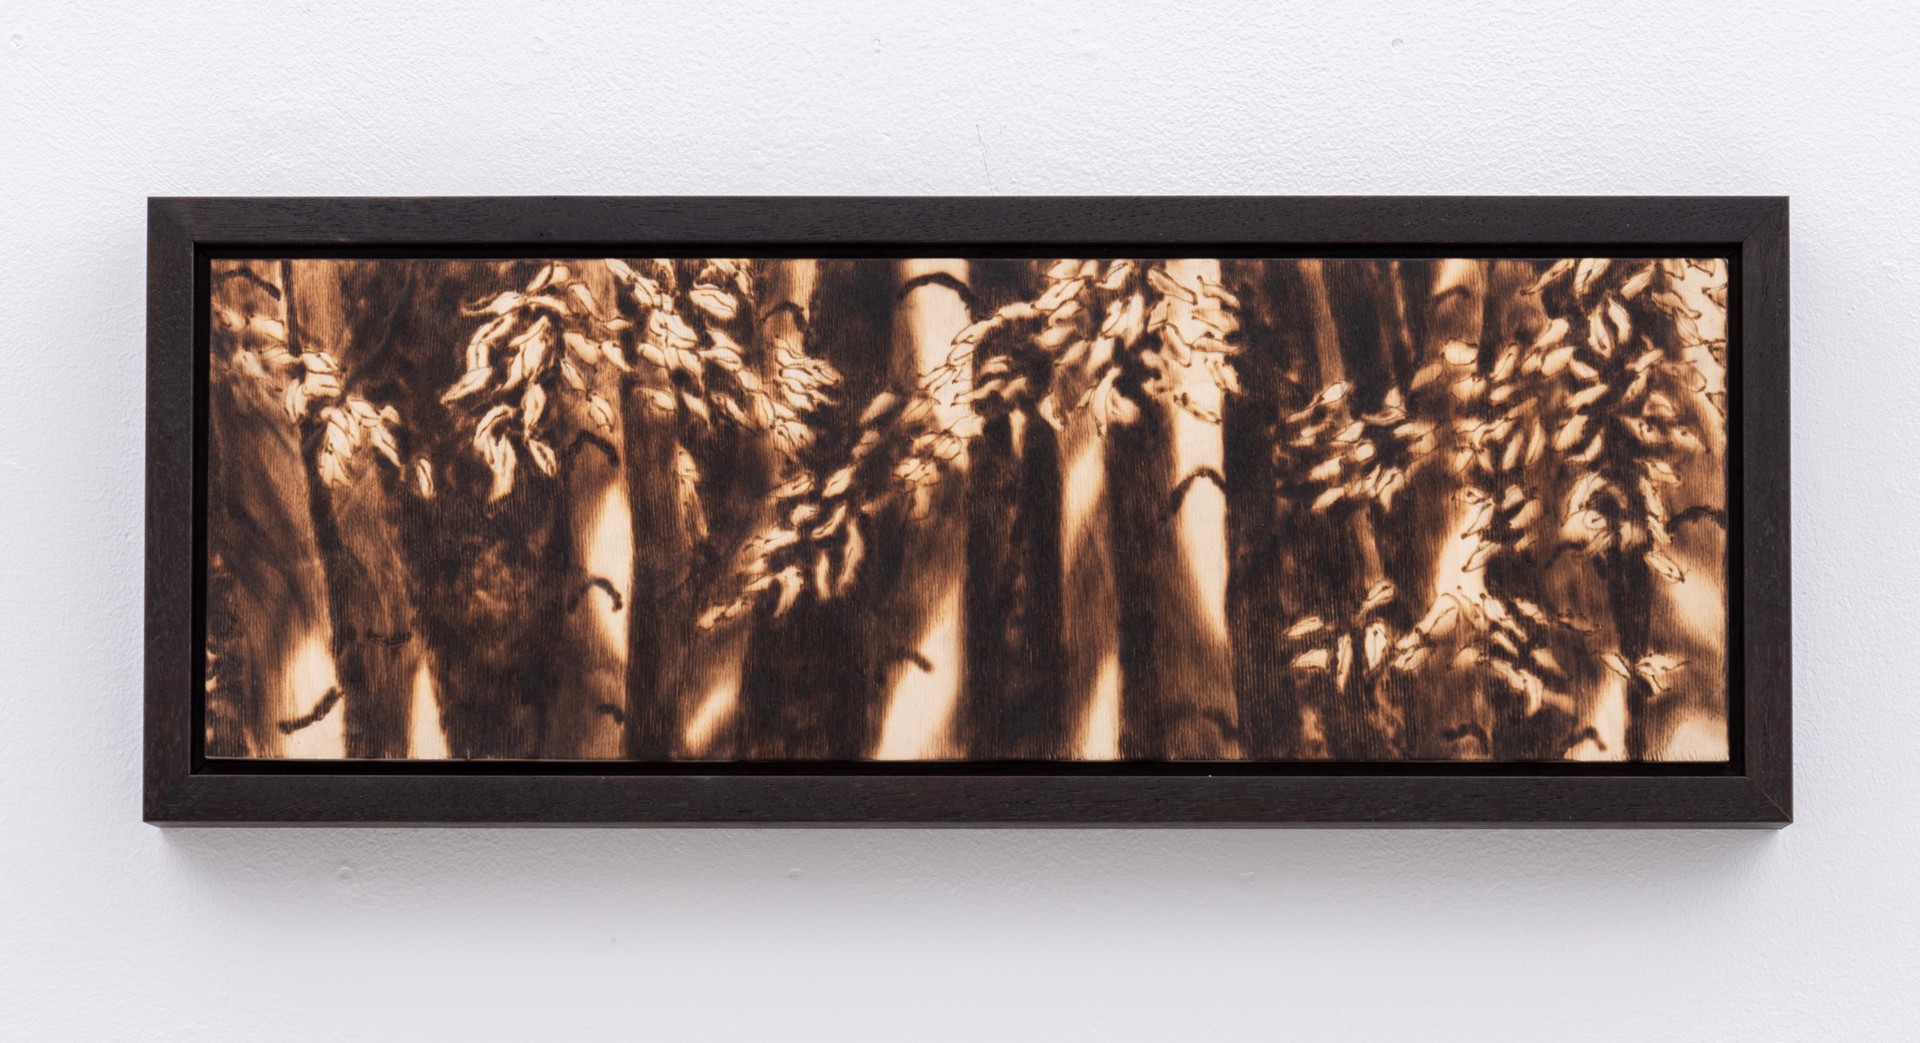 Amongst the Birches #4 by Paul Chojnowski